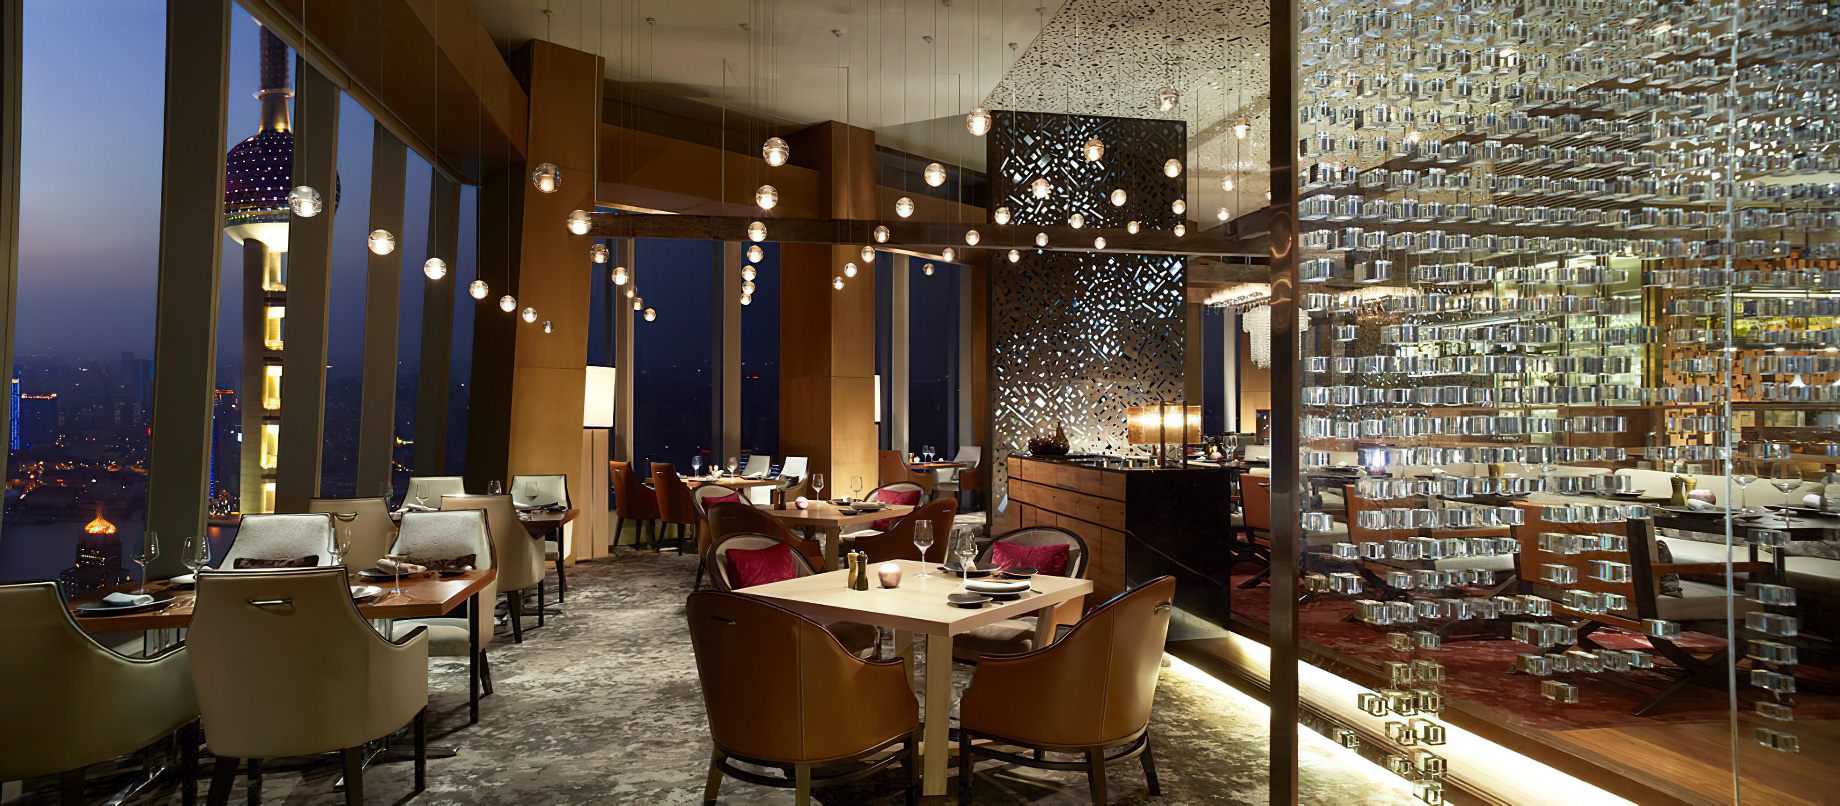 The Ritz-Carlton Shanghai, Pudong Hotel – Shanghai, China – Scena Italian Restaurant Interior